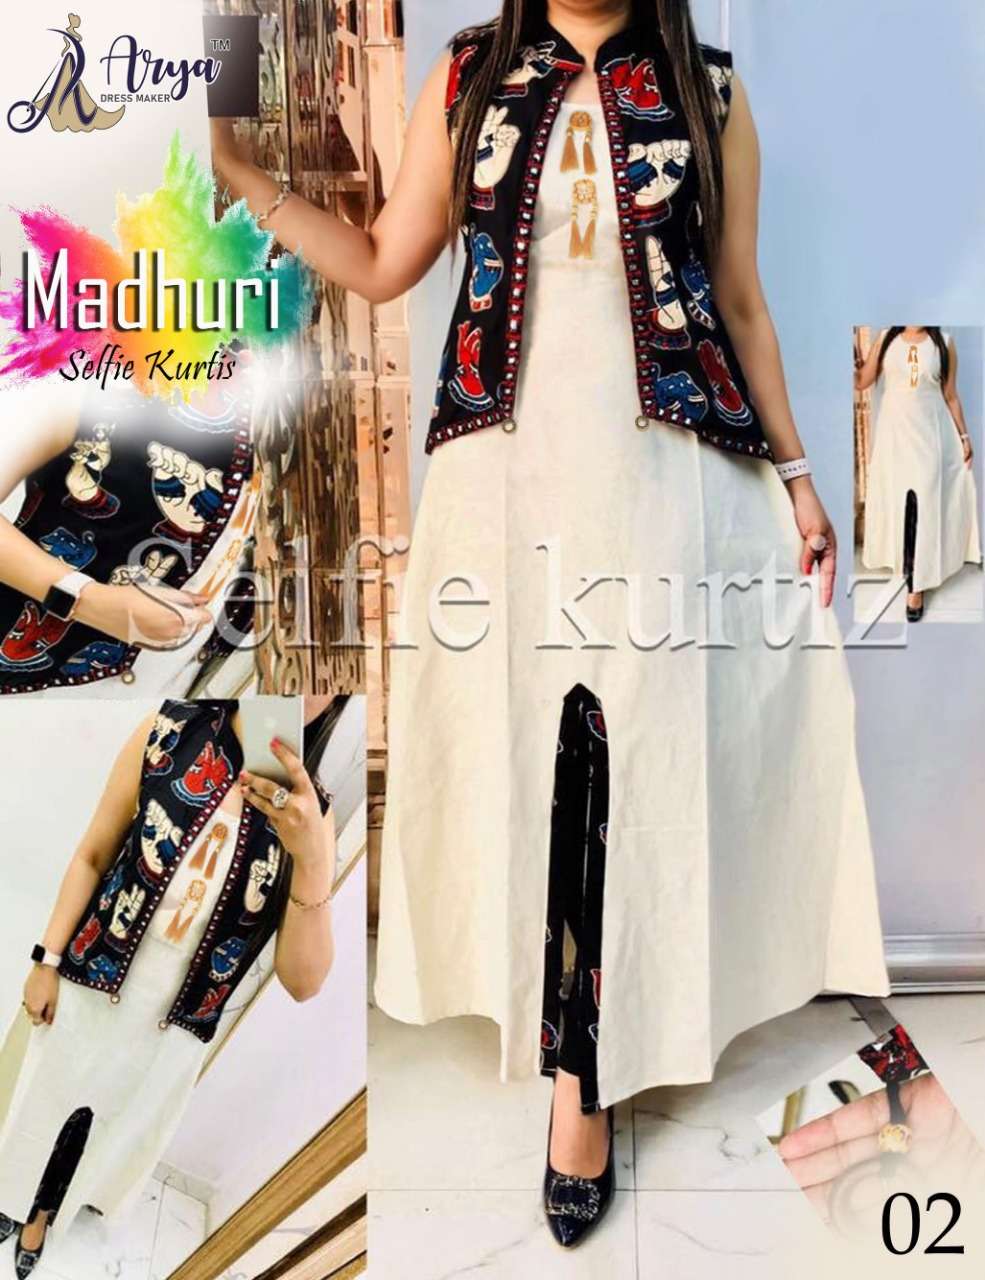 Selfie kurtiz branded dresses || diwali collection - YouTube